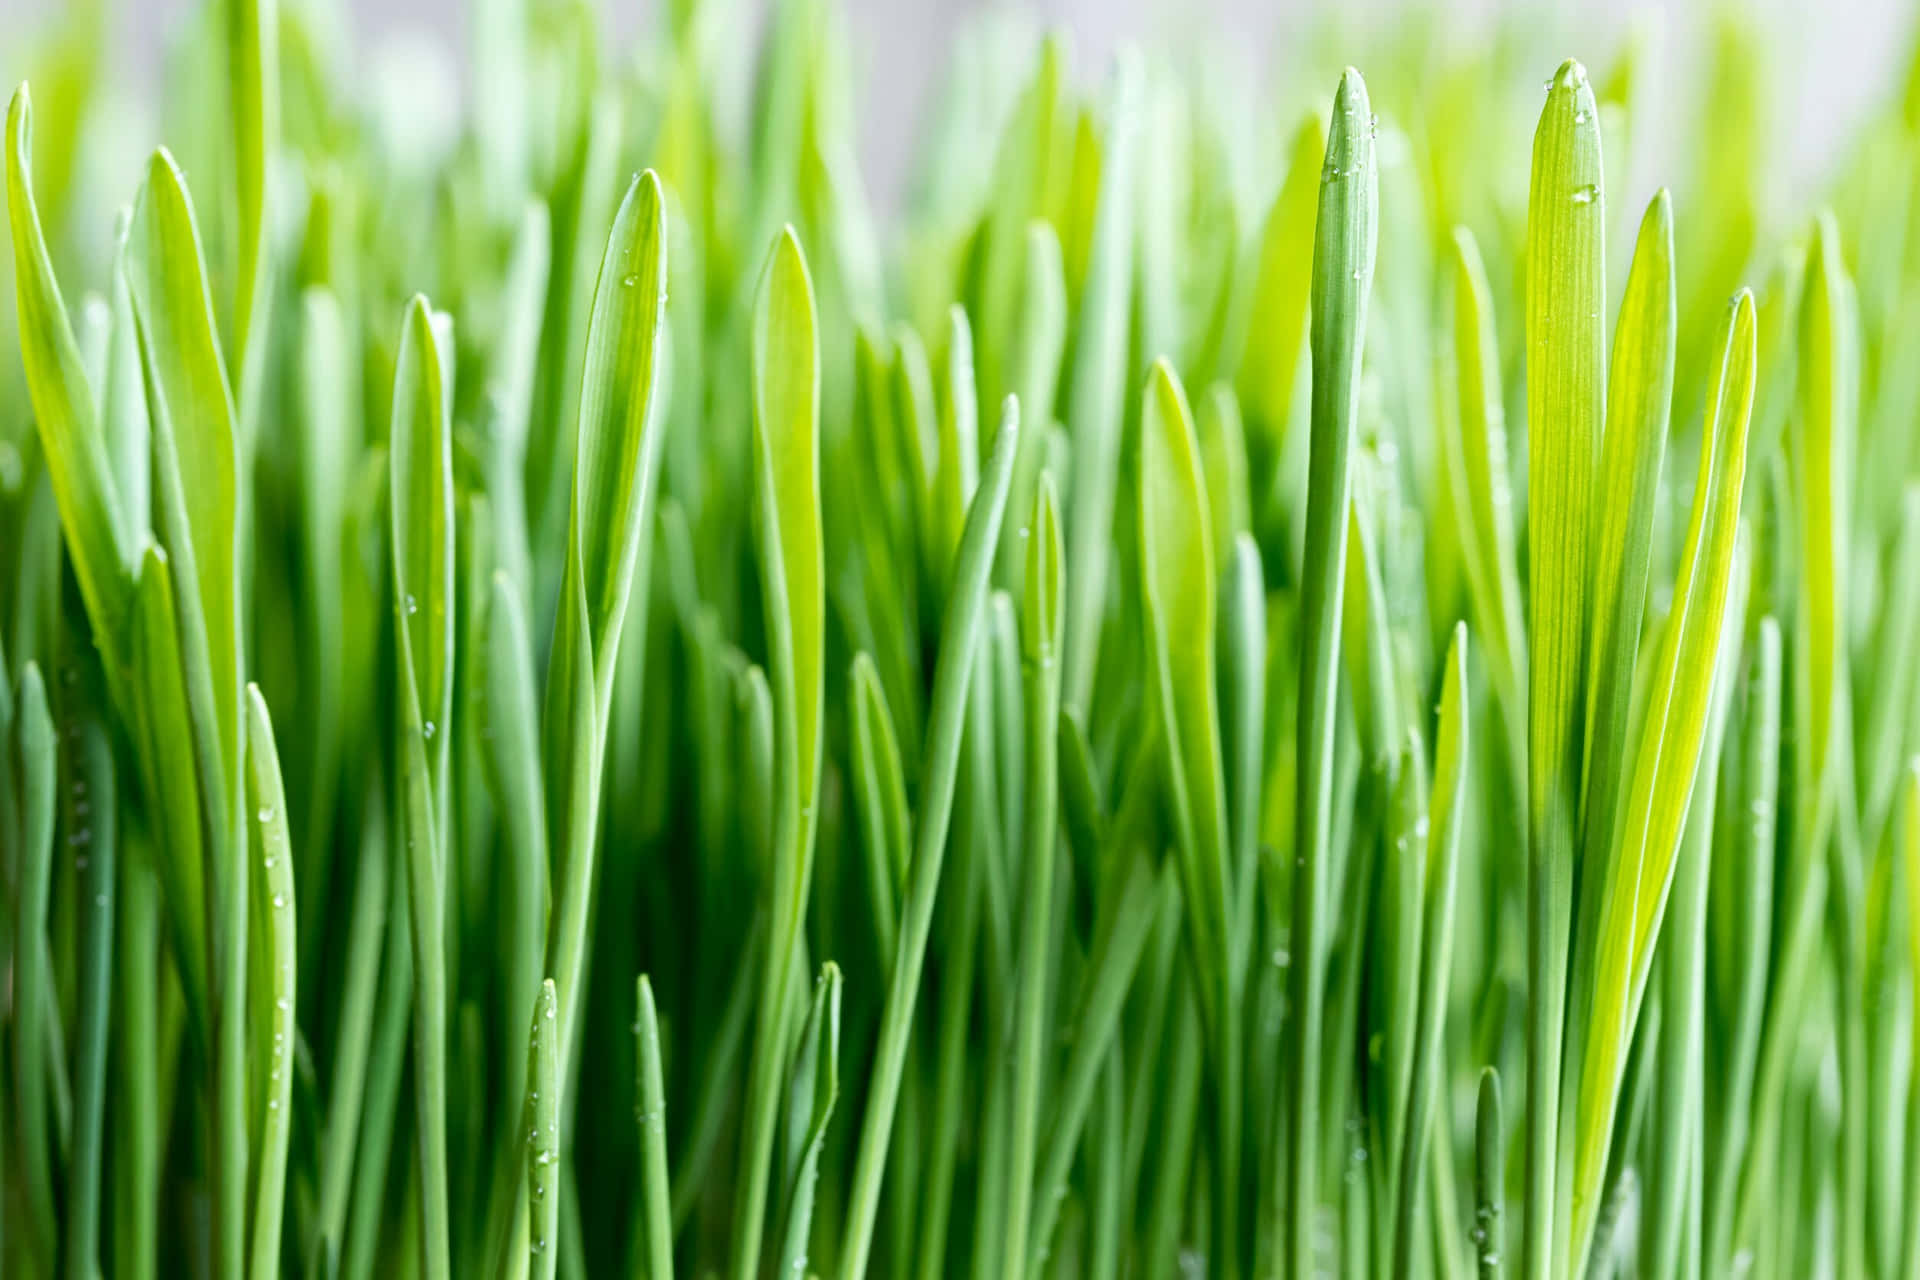 Wheat Green Grass Closeup Picture